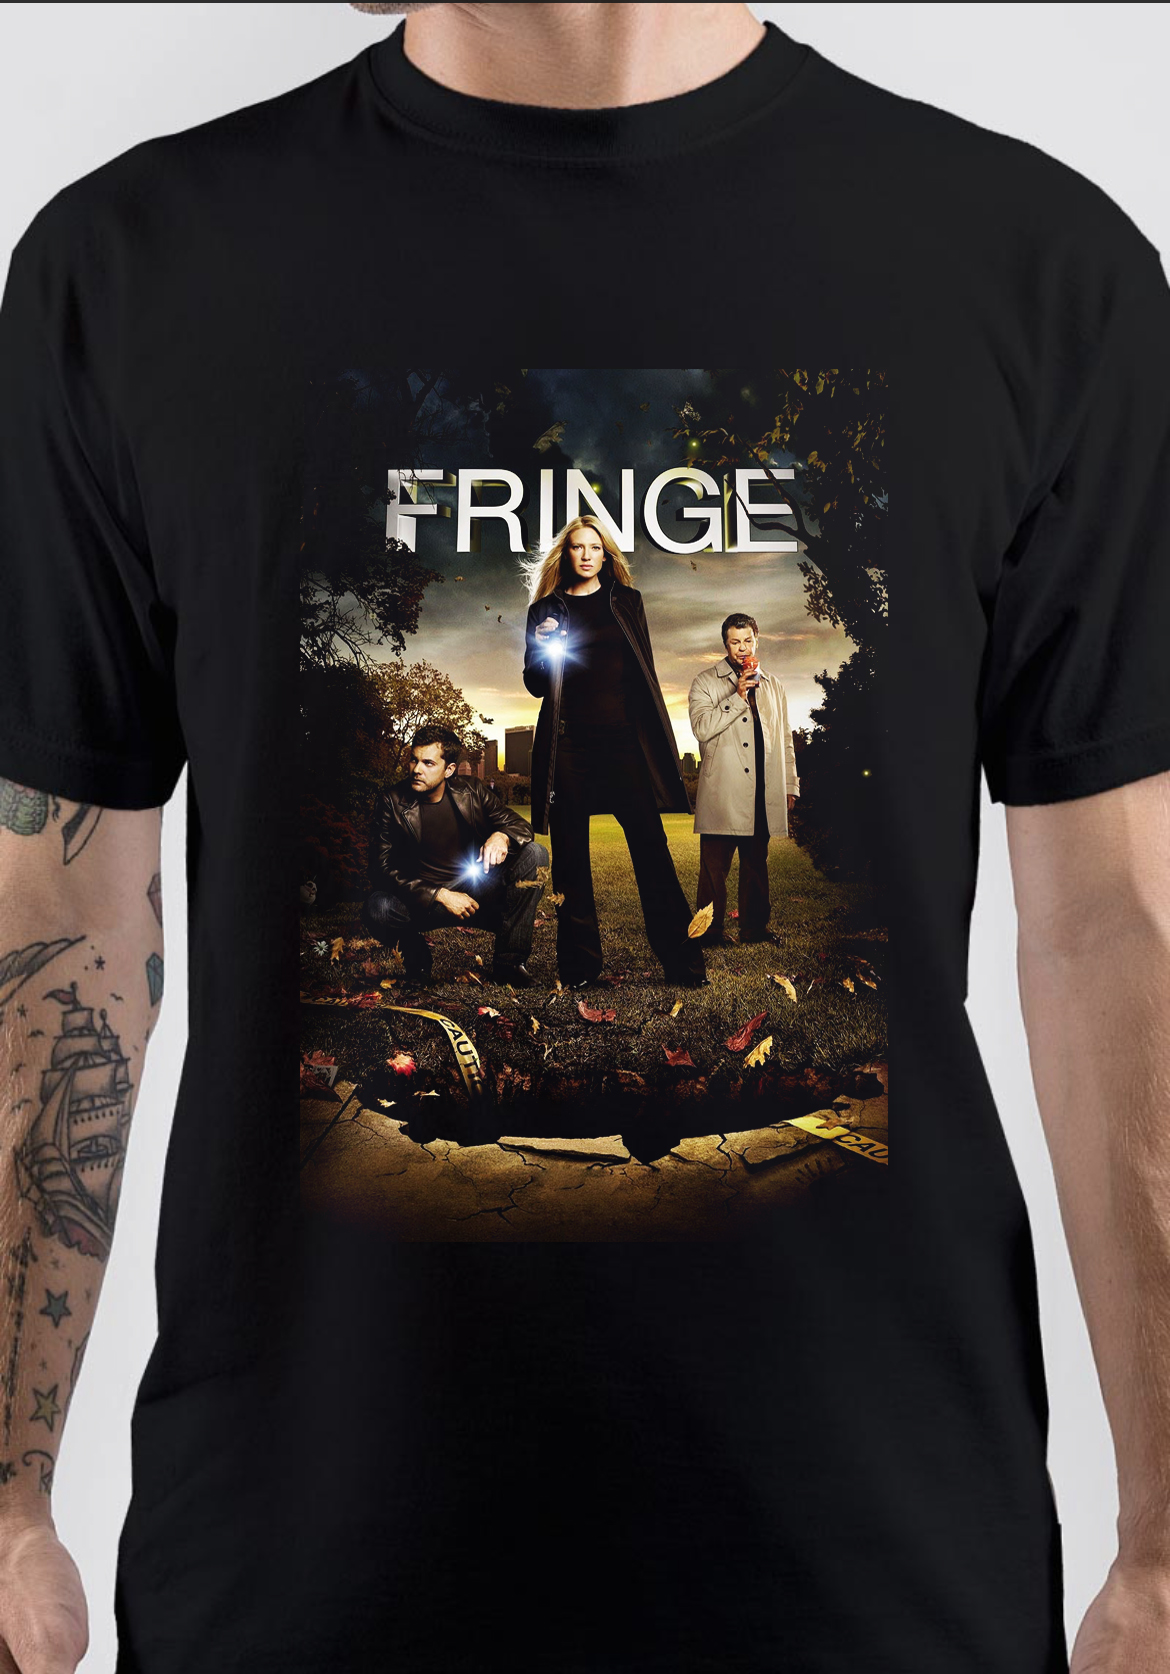 Fringe T-Shirt And Merchandise